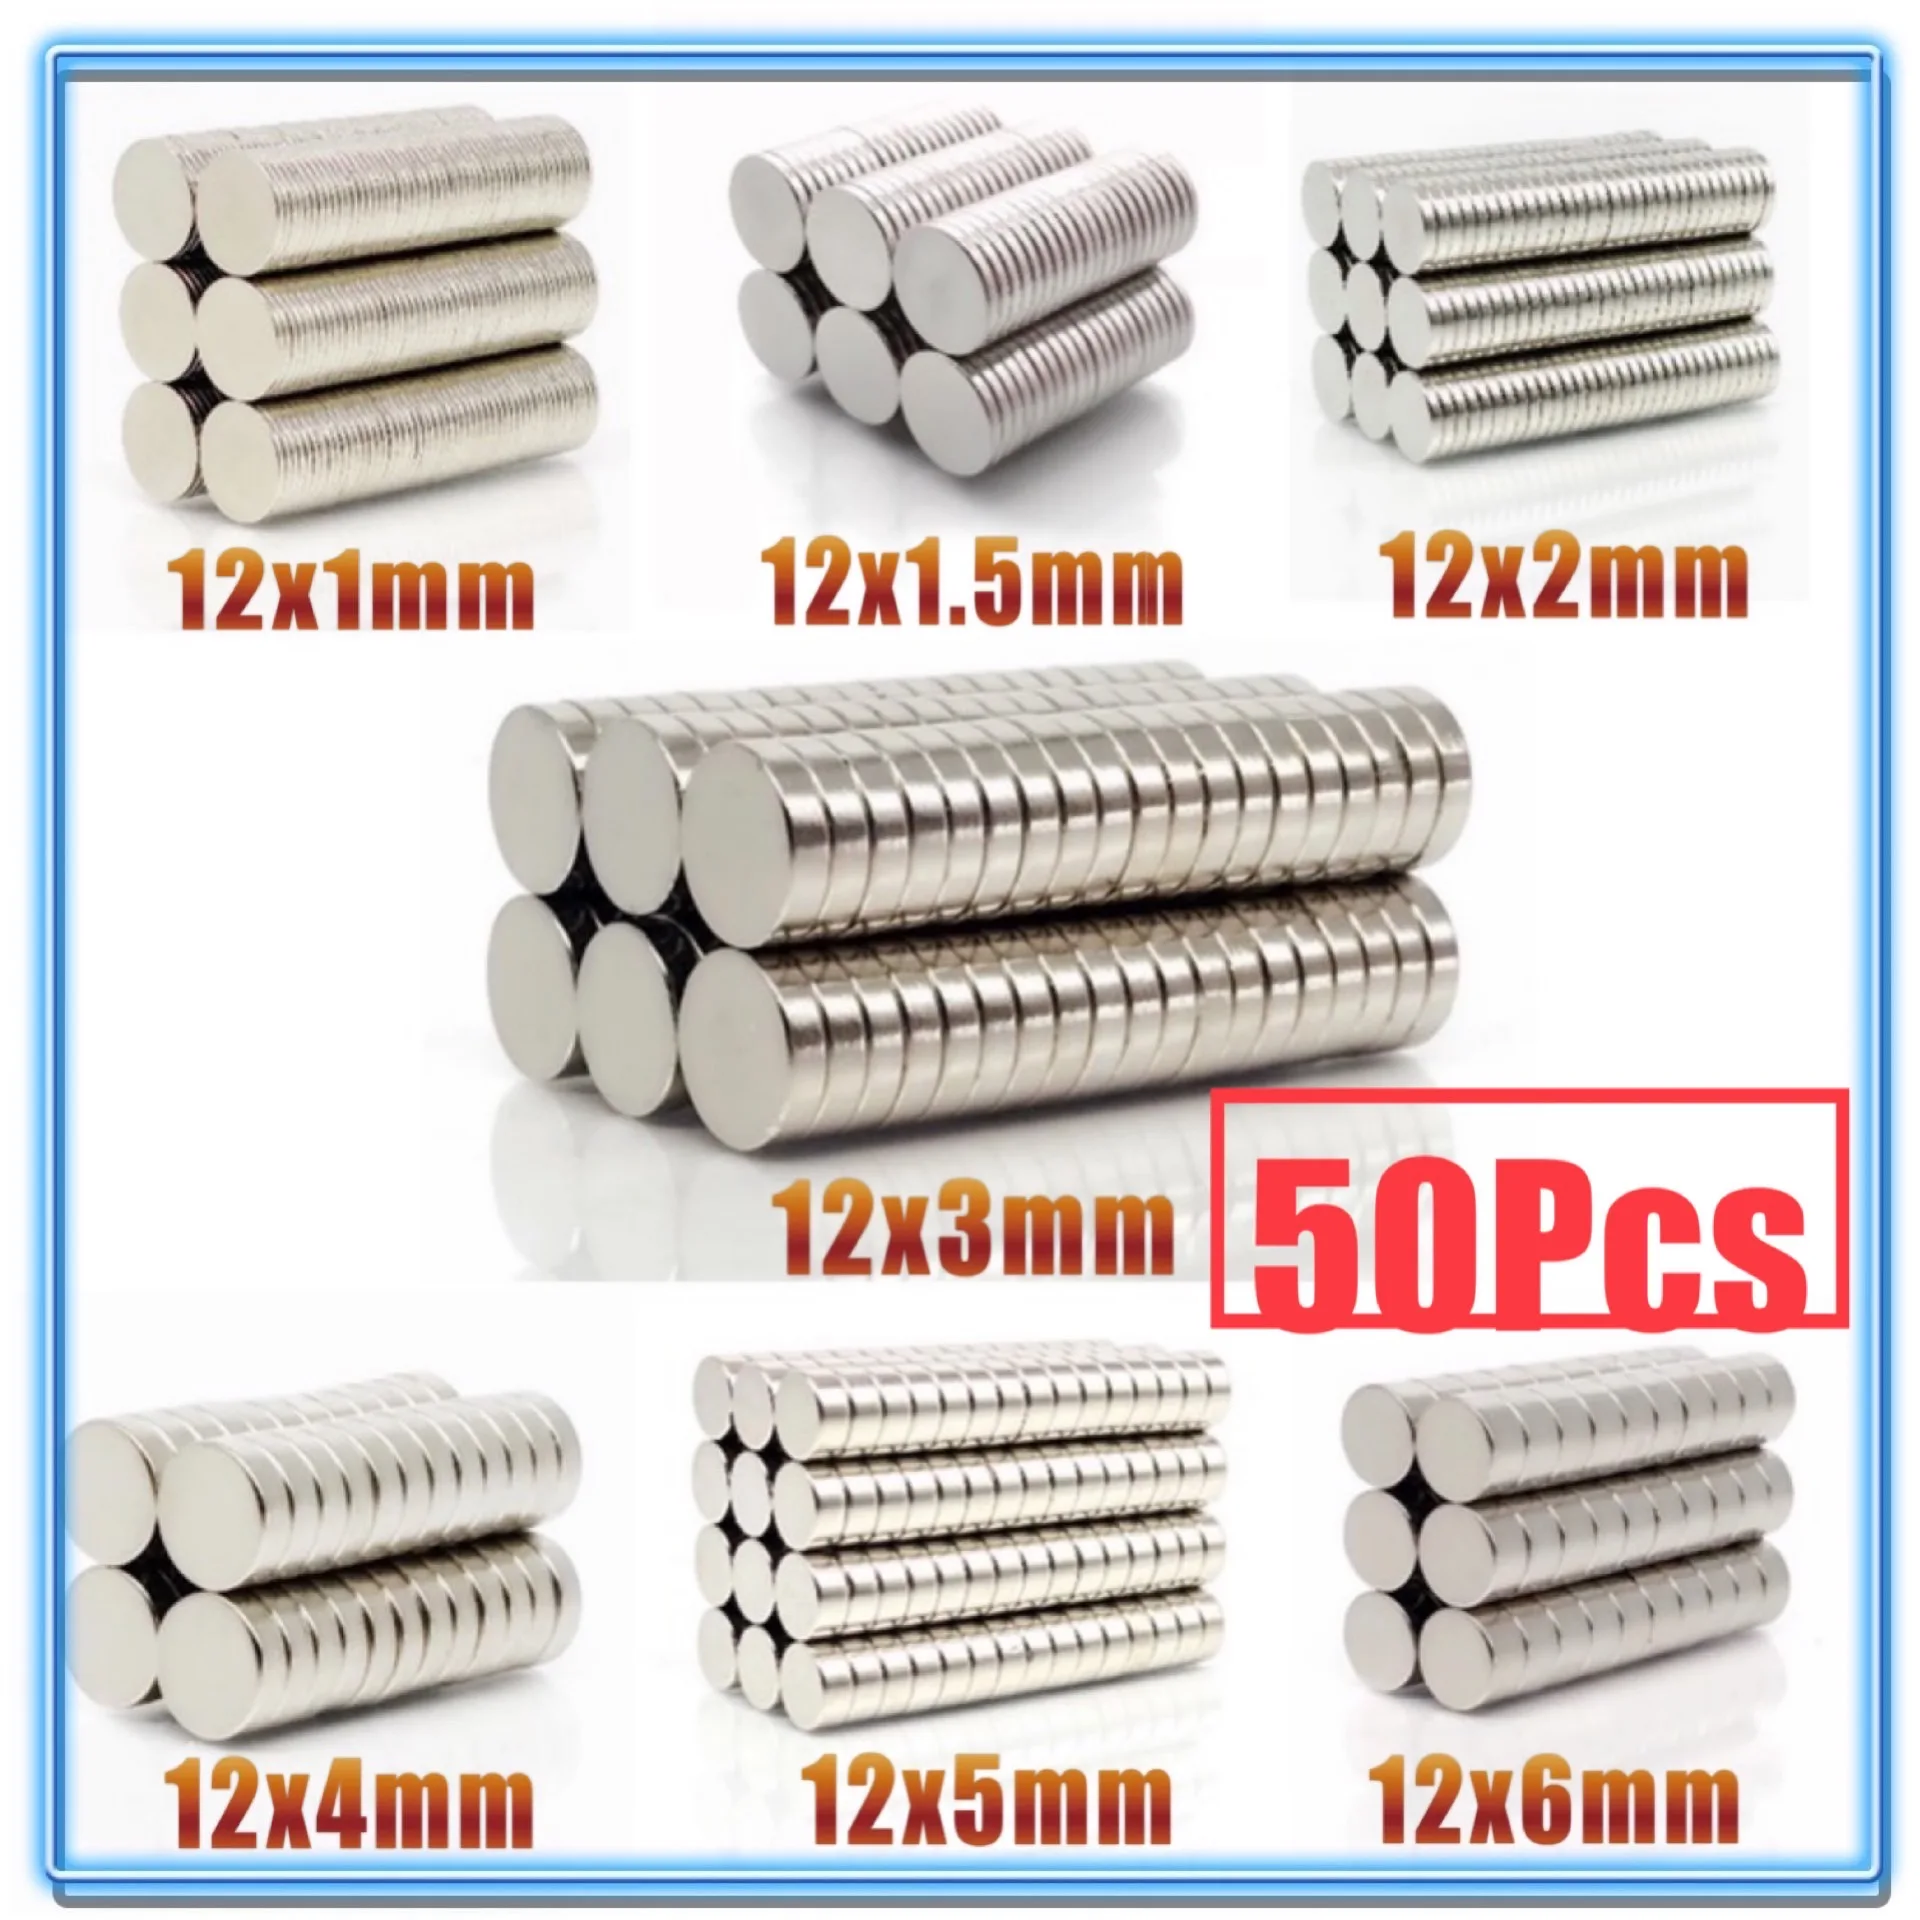 

50Pcs N35 Round Magnet 12x1 12x1.5 12x2 12x3 12x4 mm Neodymium Magnet Permanent NdFeB Super Strong Powerful Magnets 12*1 12*3